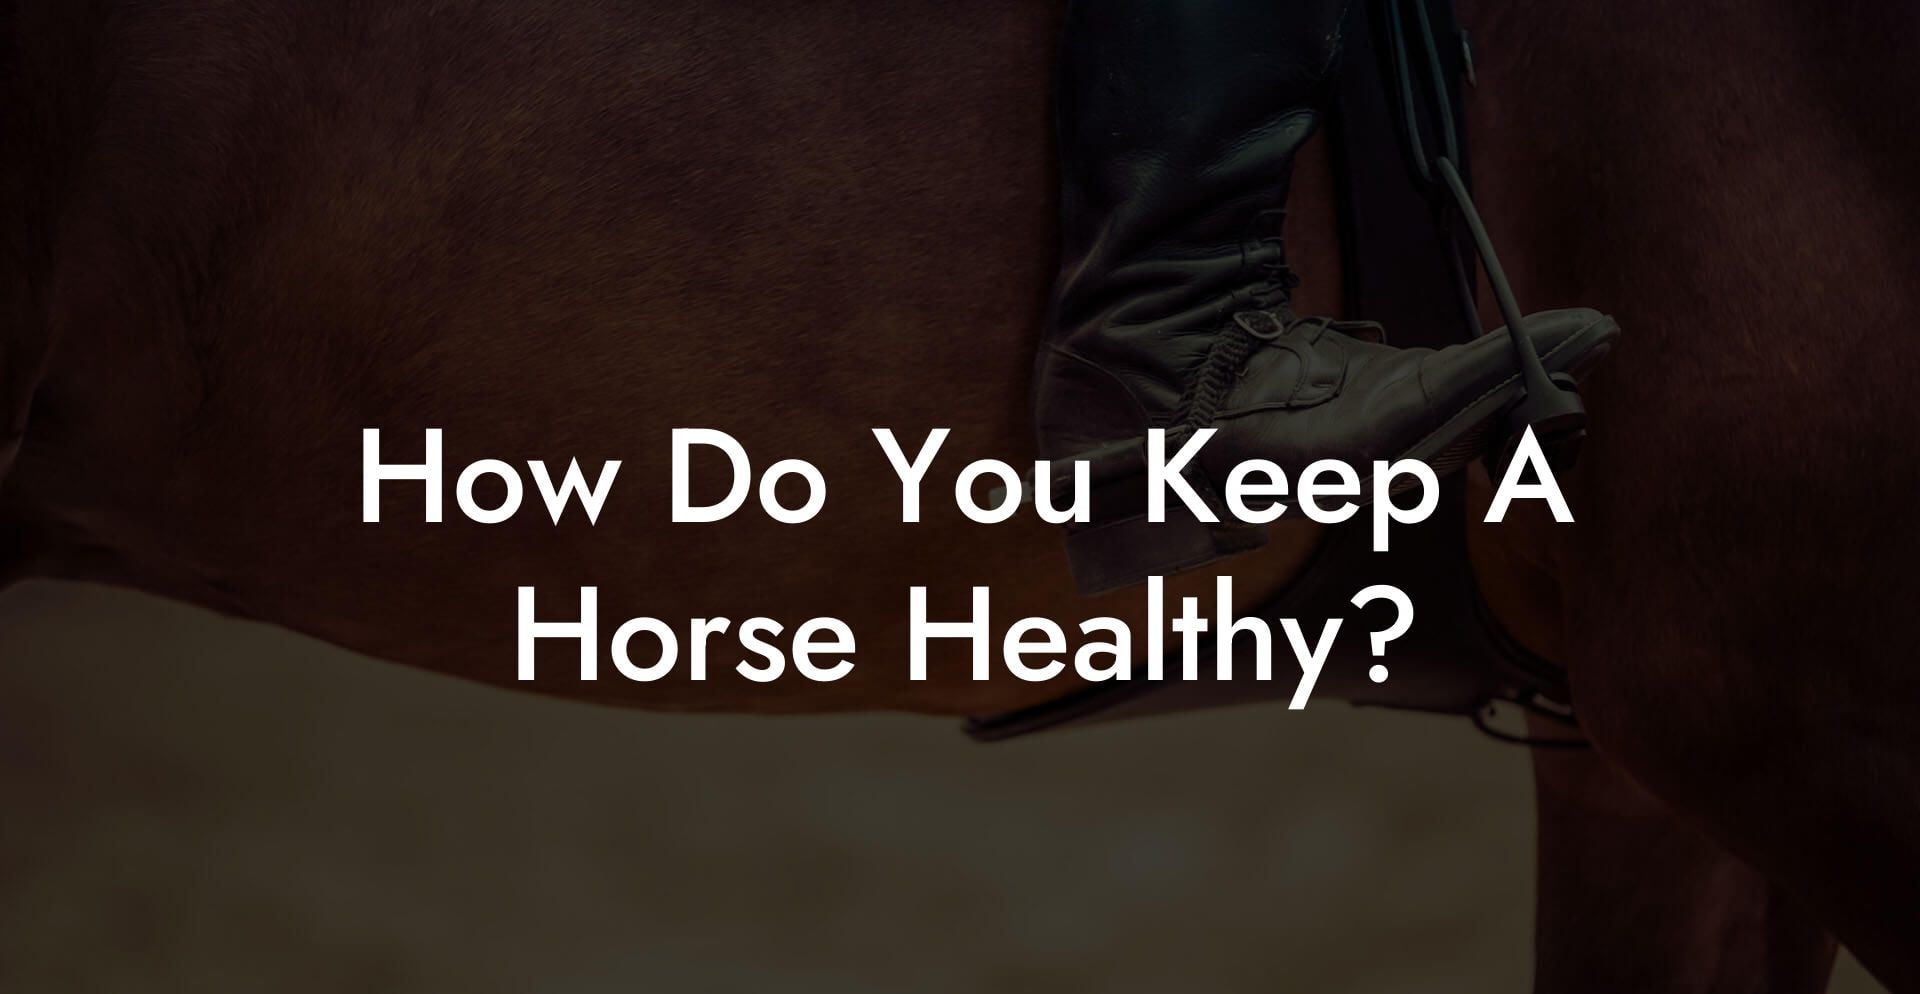 How Do You Keep A Horse Healthy?